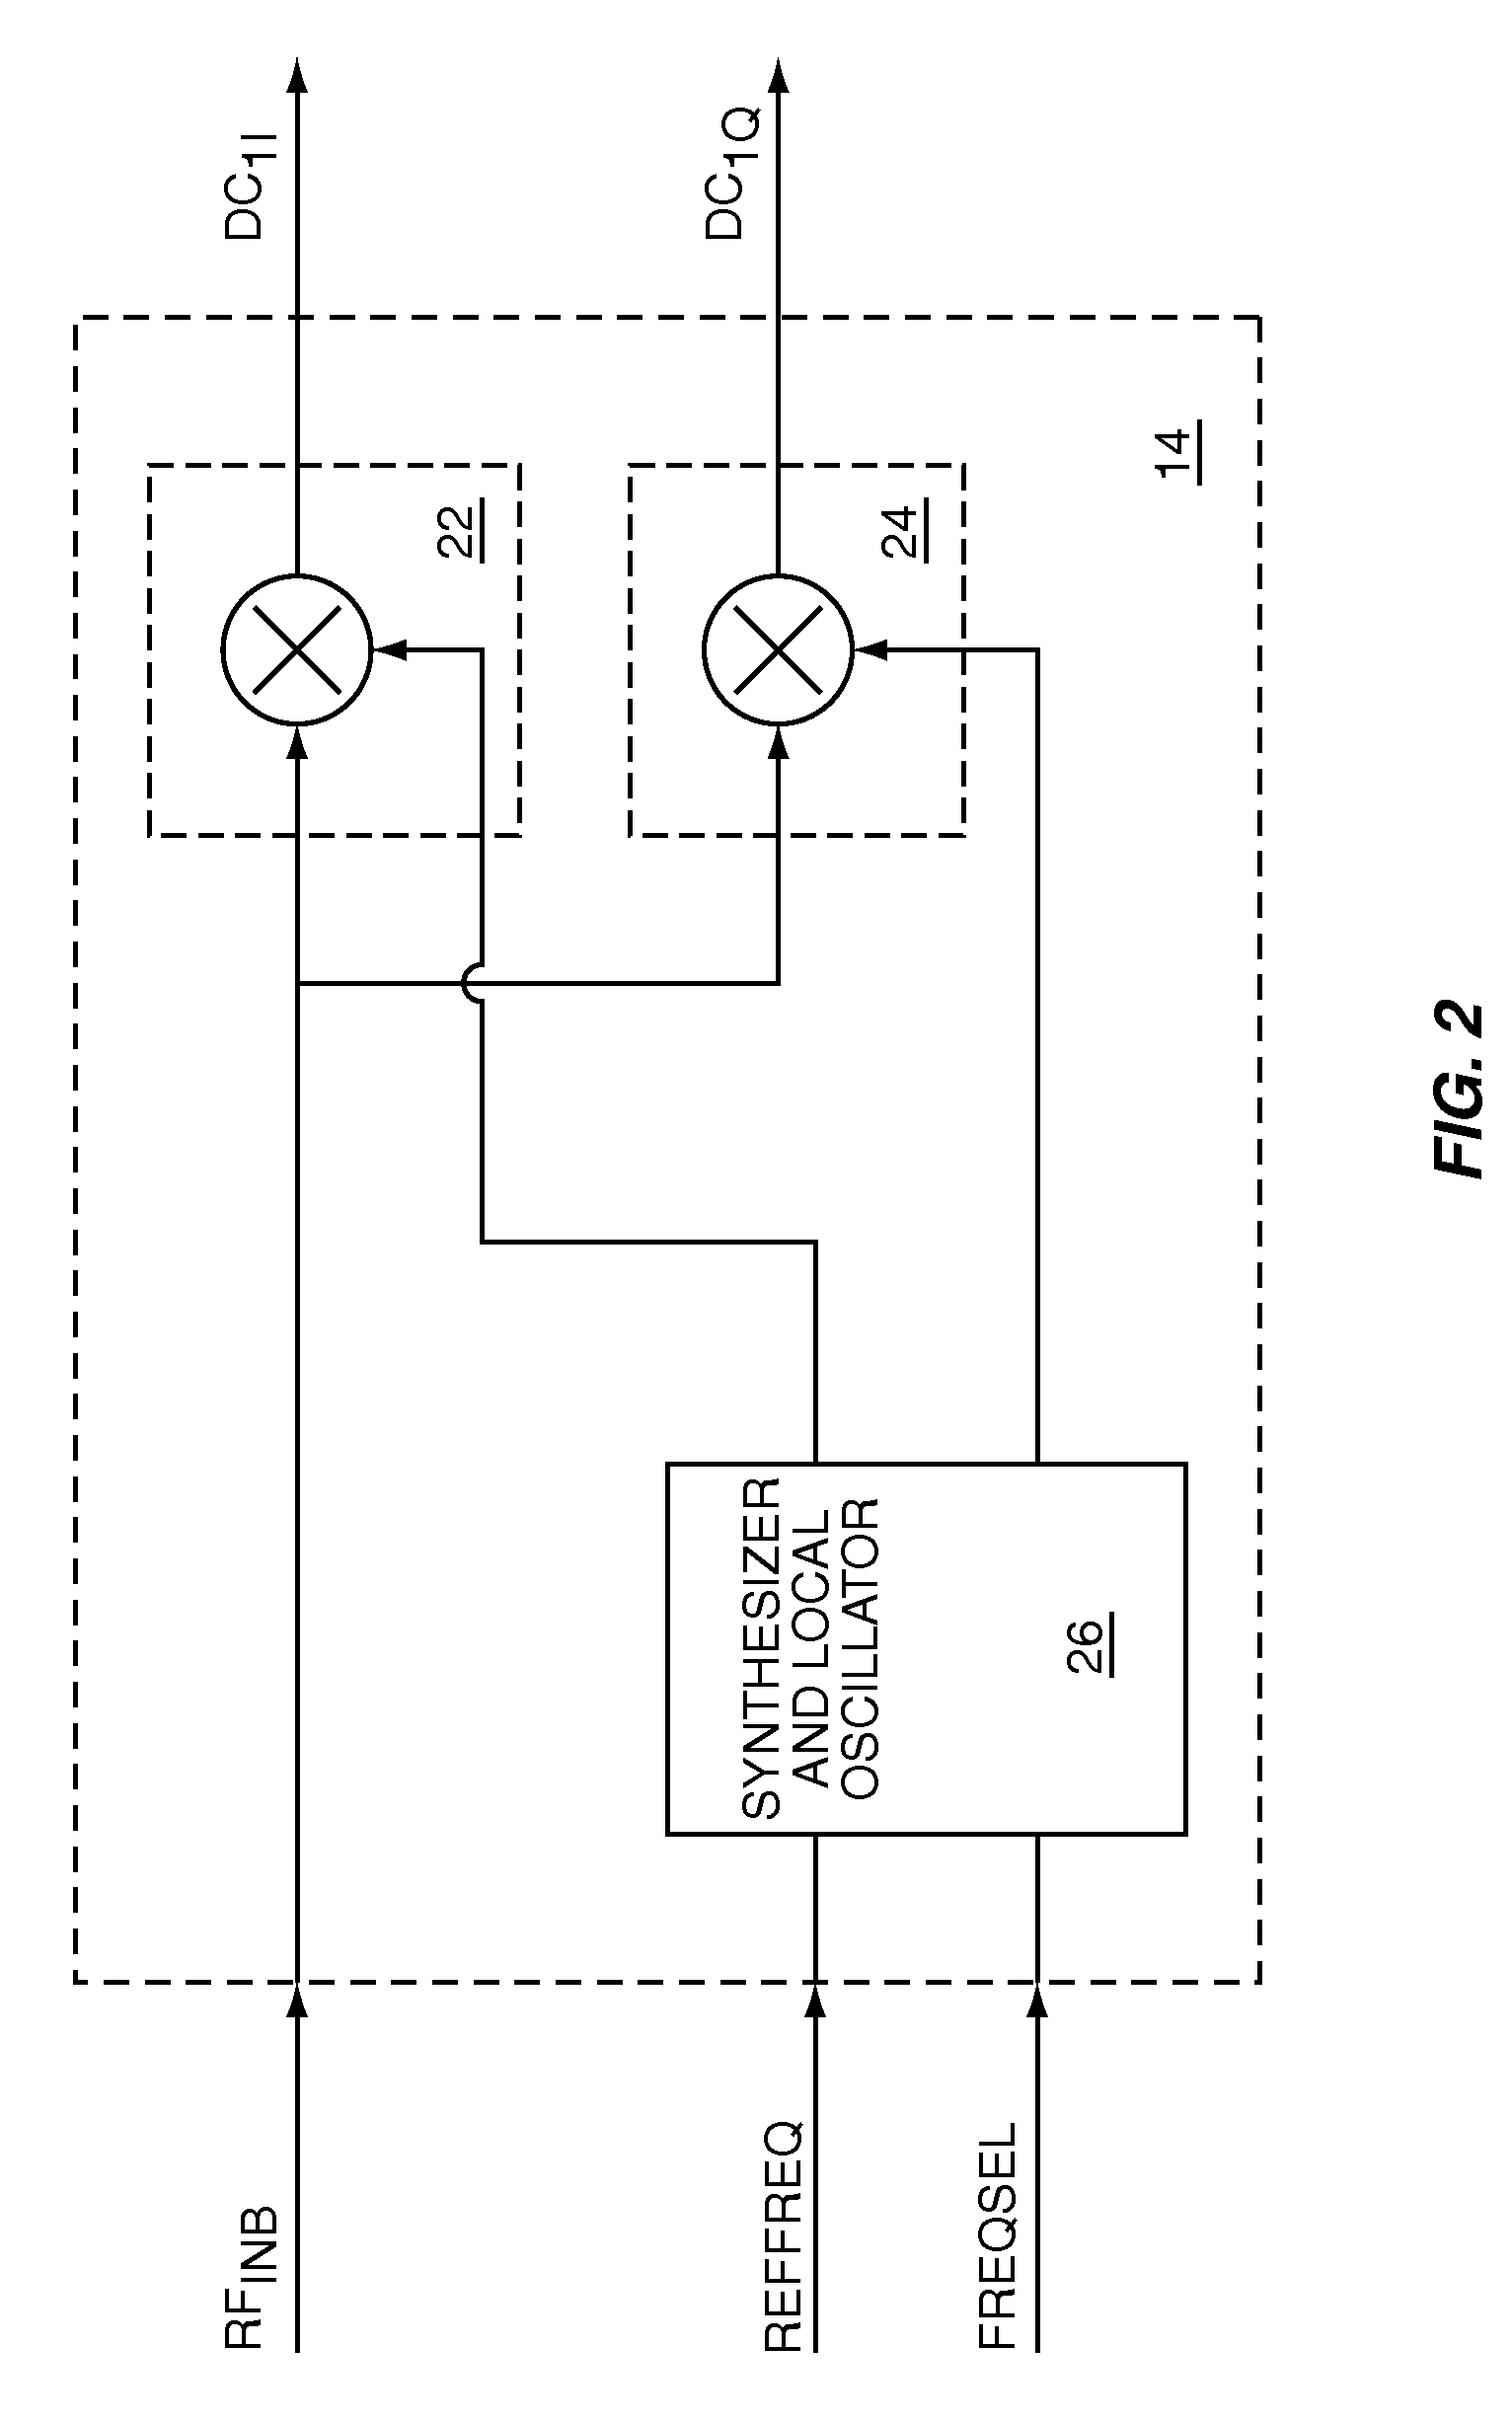 Quadrature single-mixer multi-mode radio frequency receiver